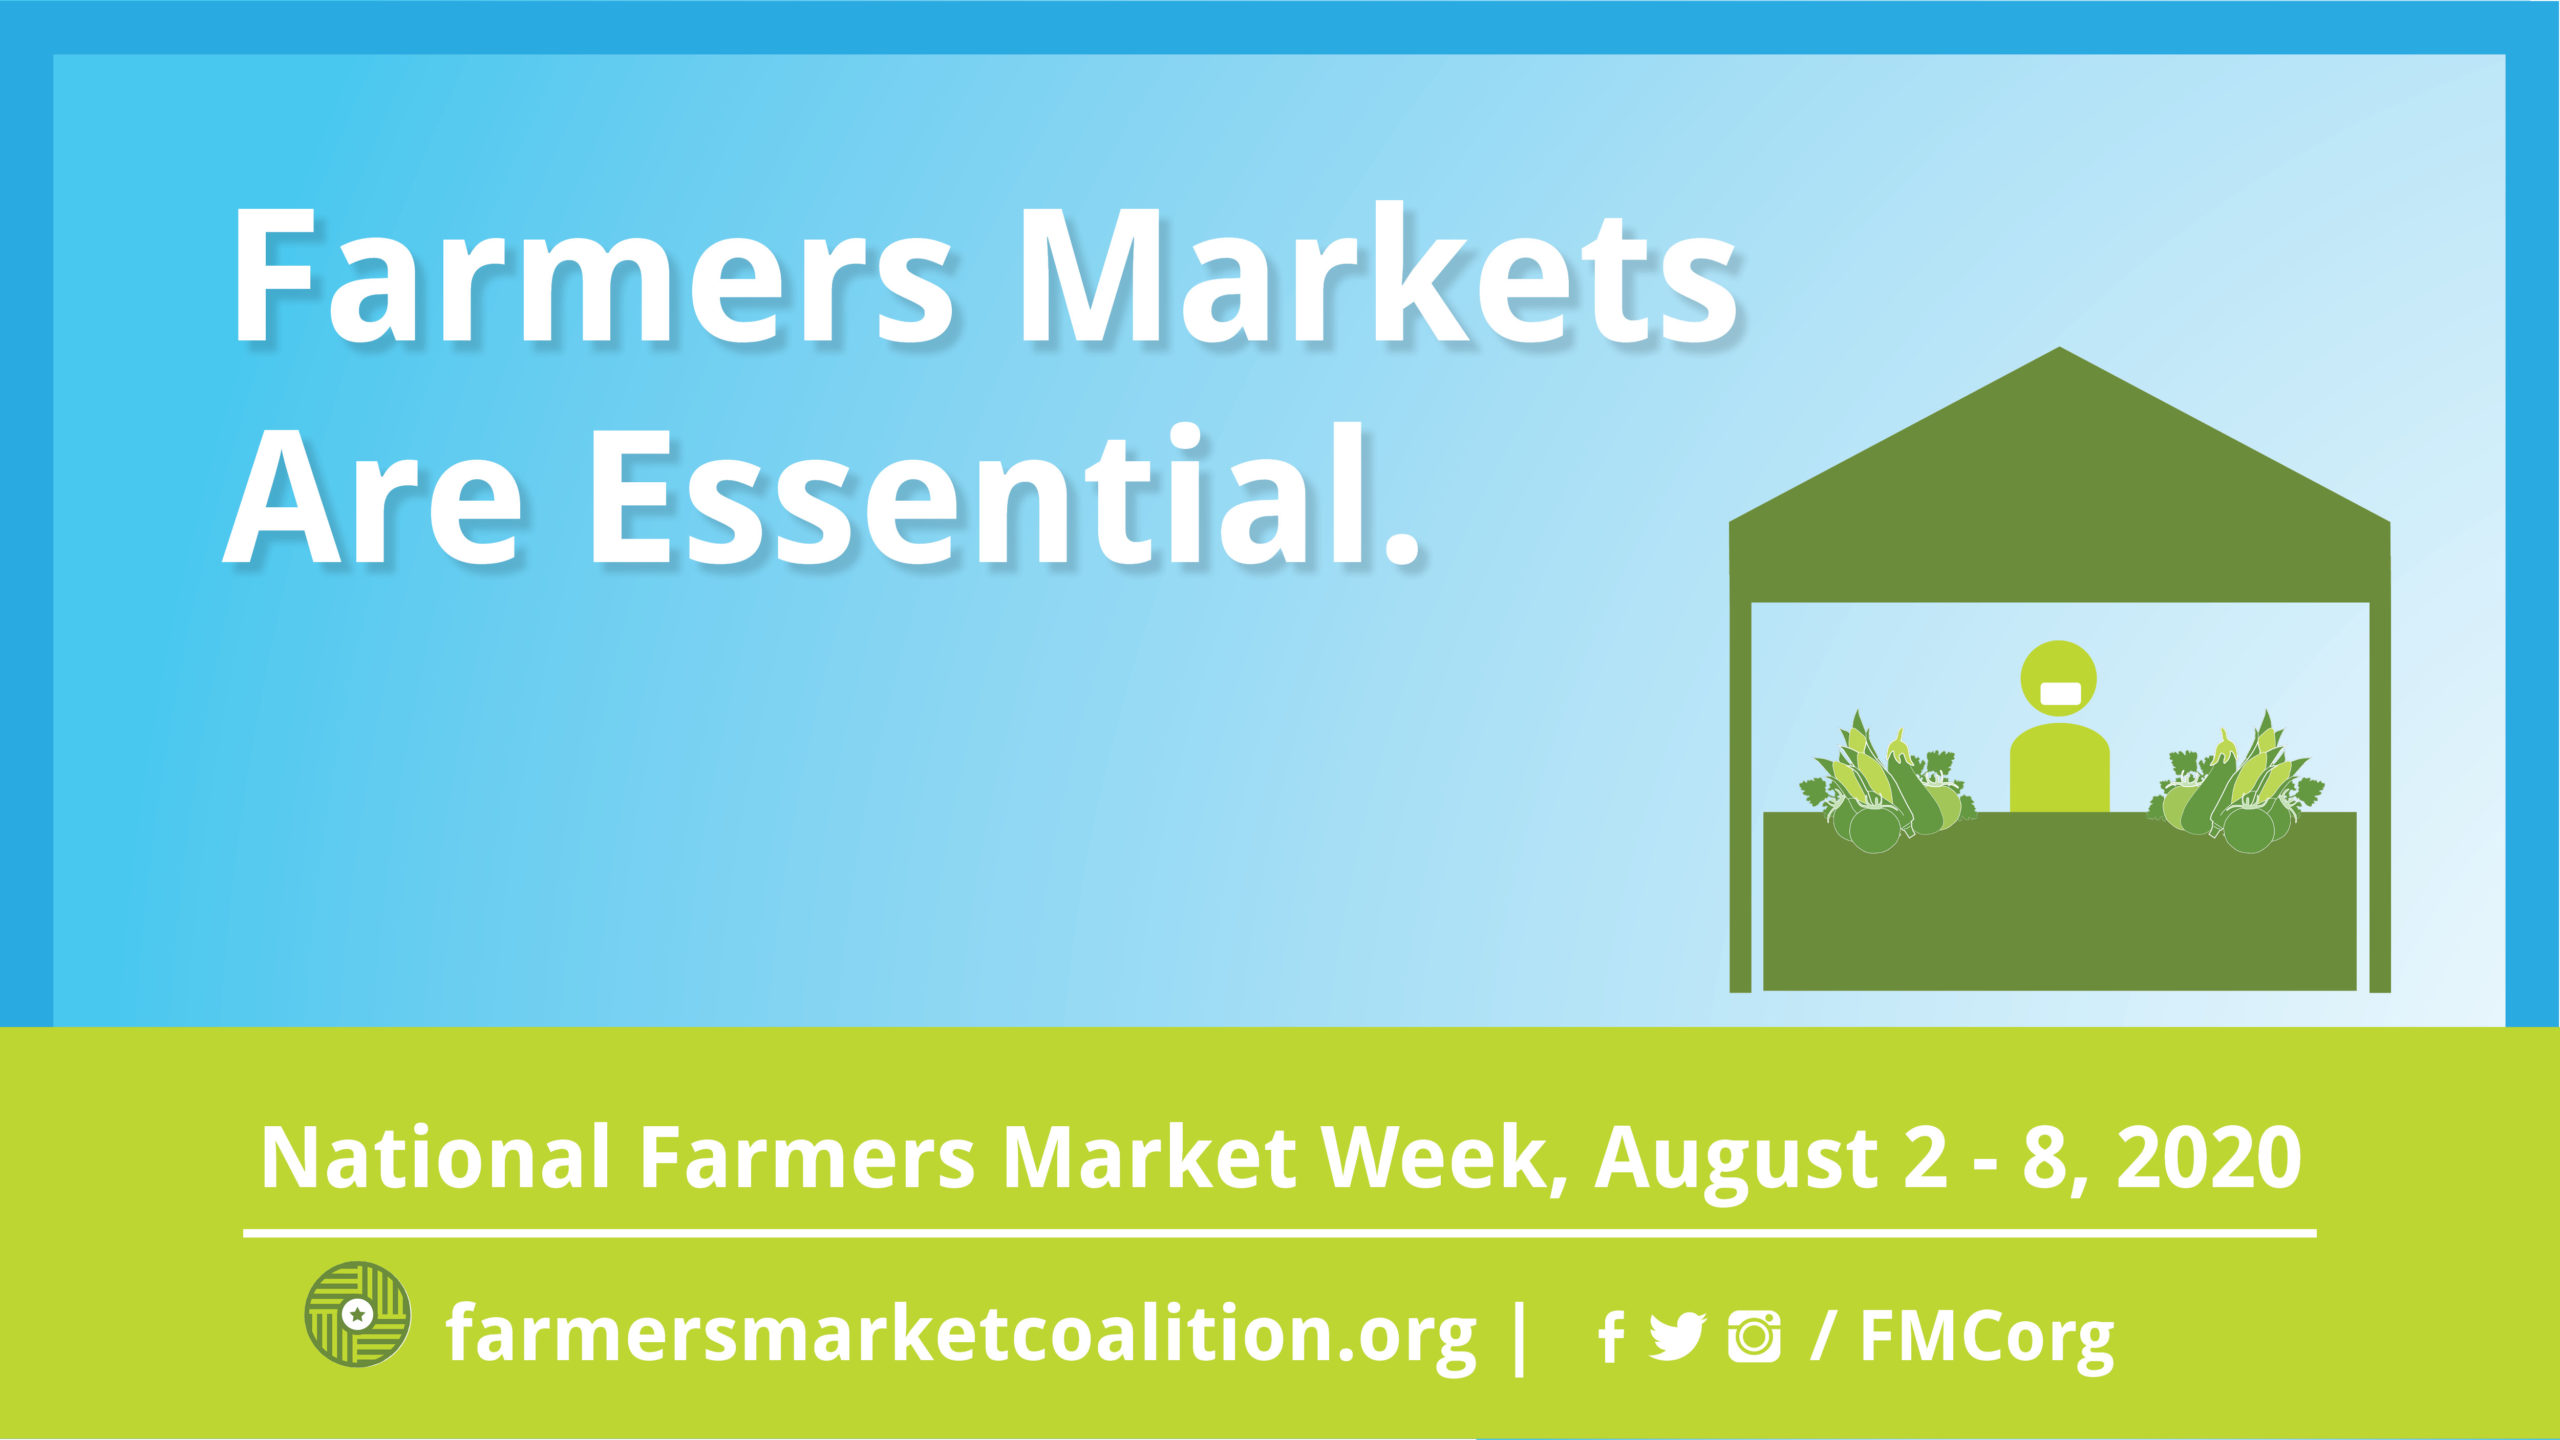 NFMW farmers markets are essential amid coronavirus